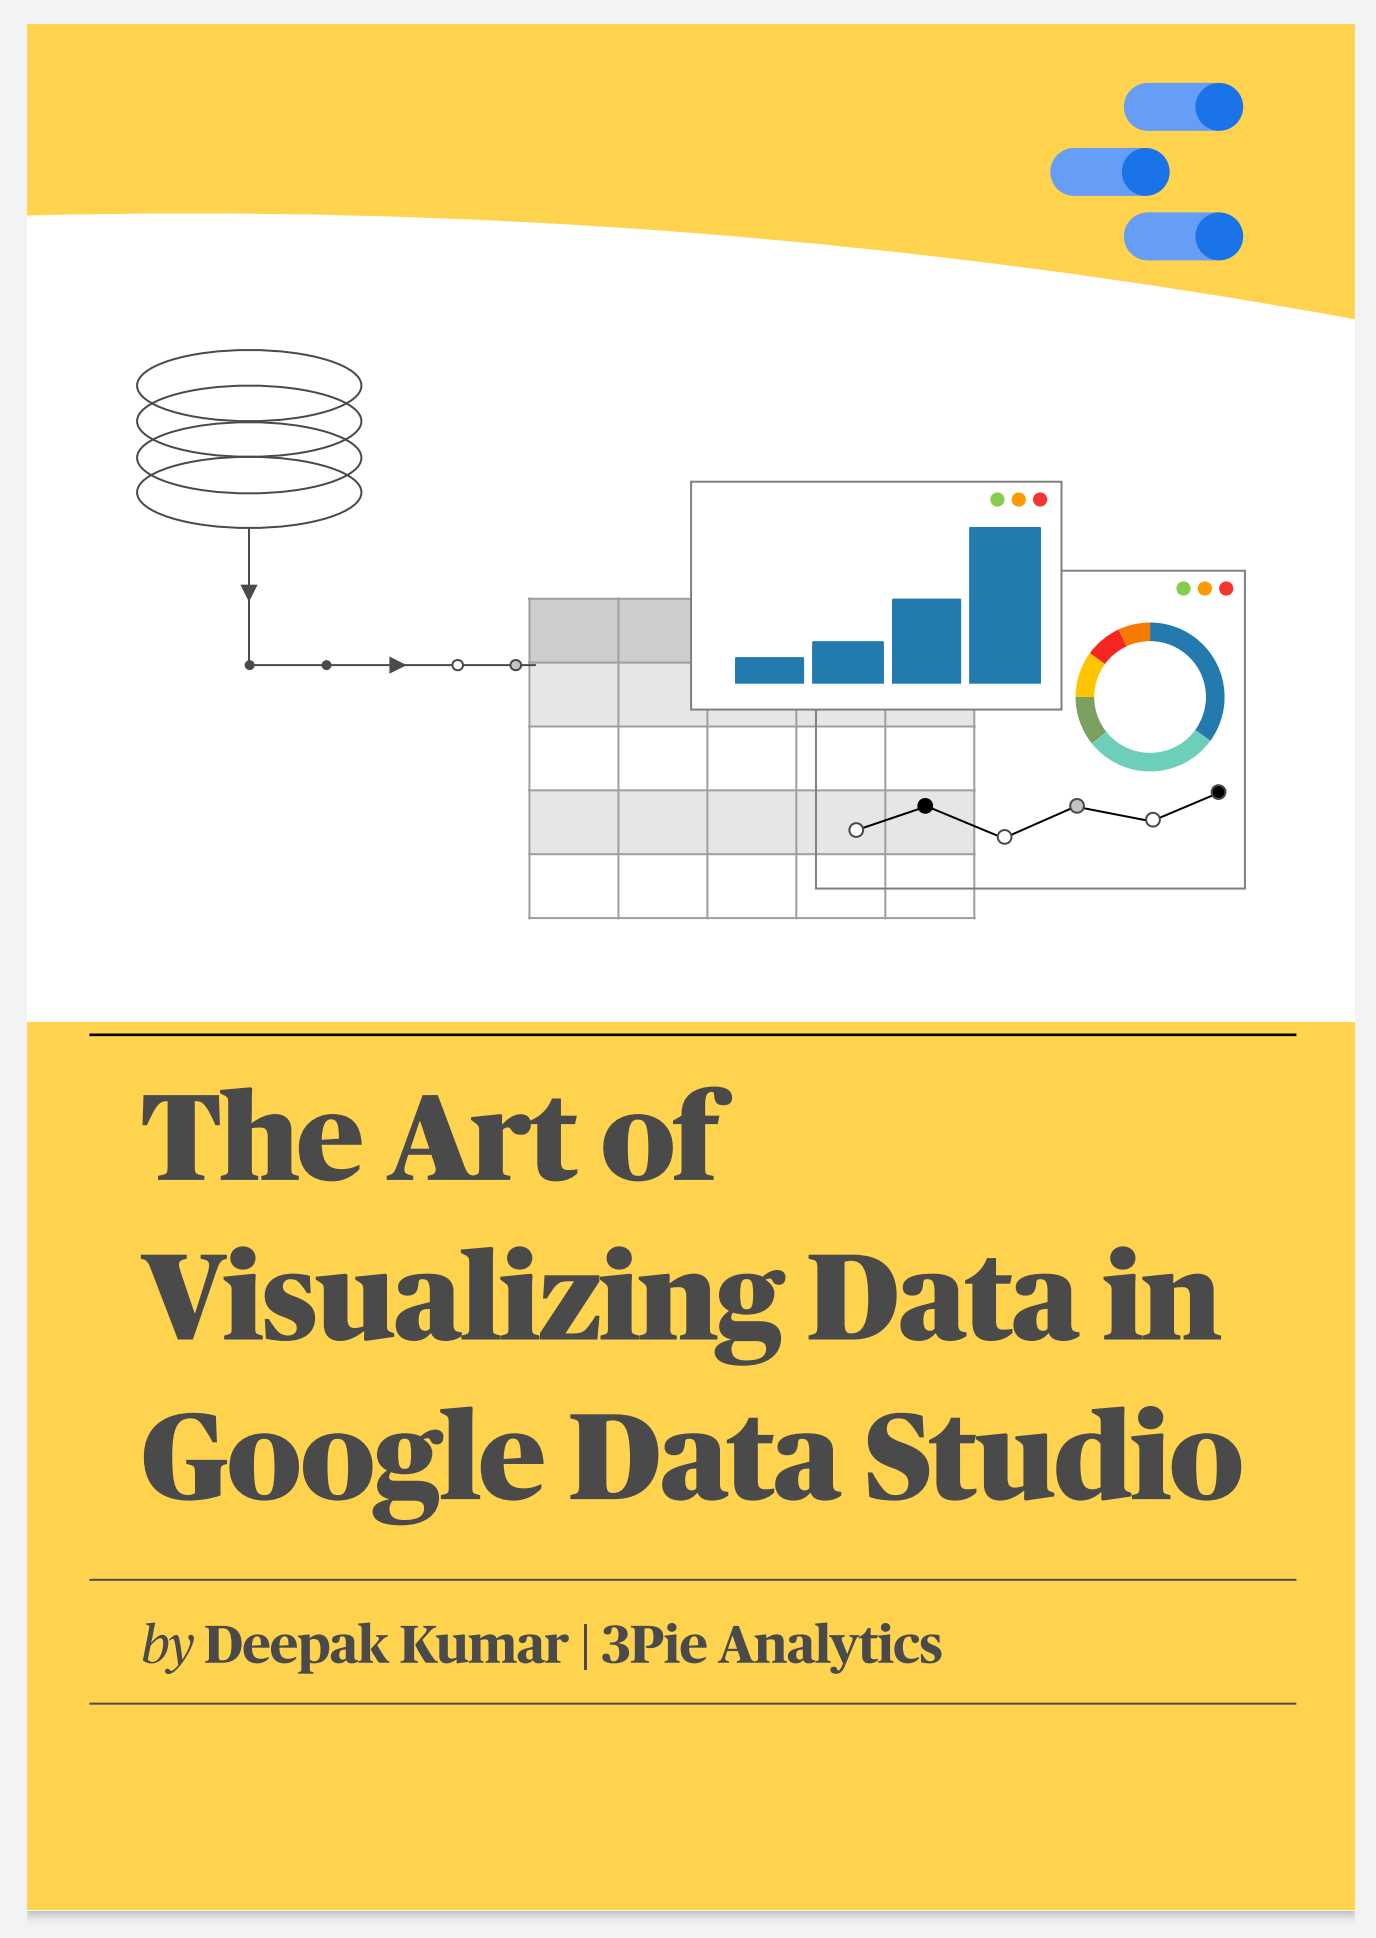 The Art of Visualizing Data in Google Data Studio